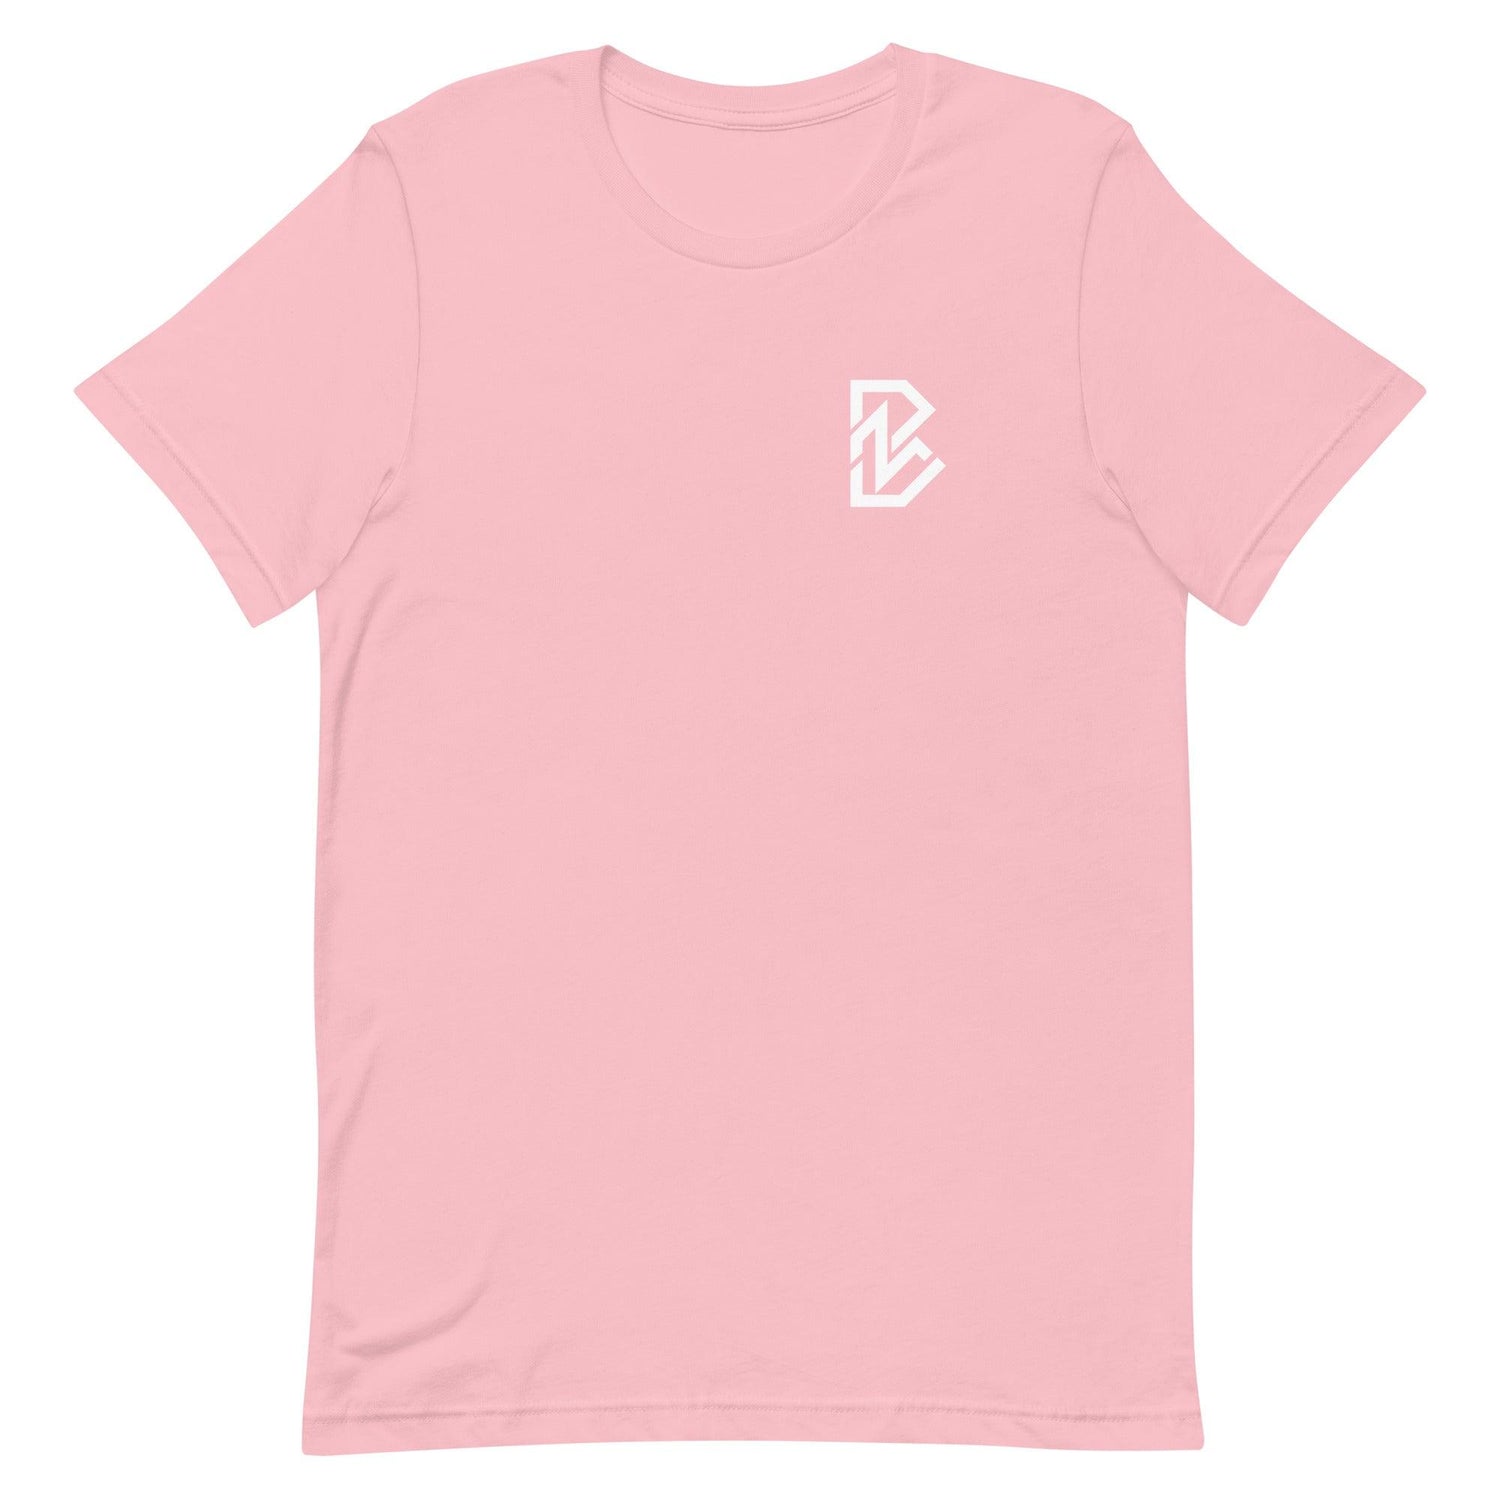 Brandon Neely “Signature” t-shirt - Fan Arch